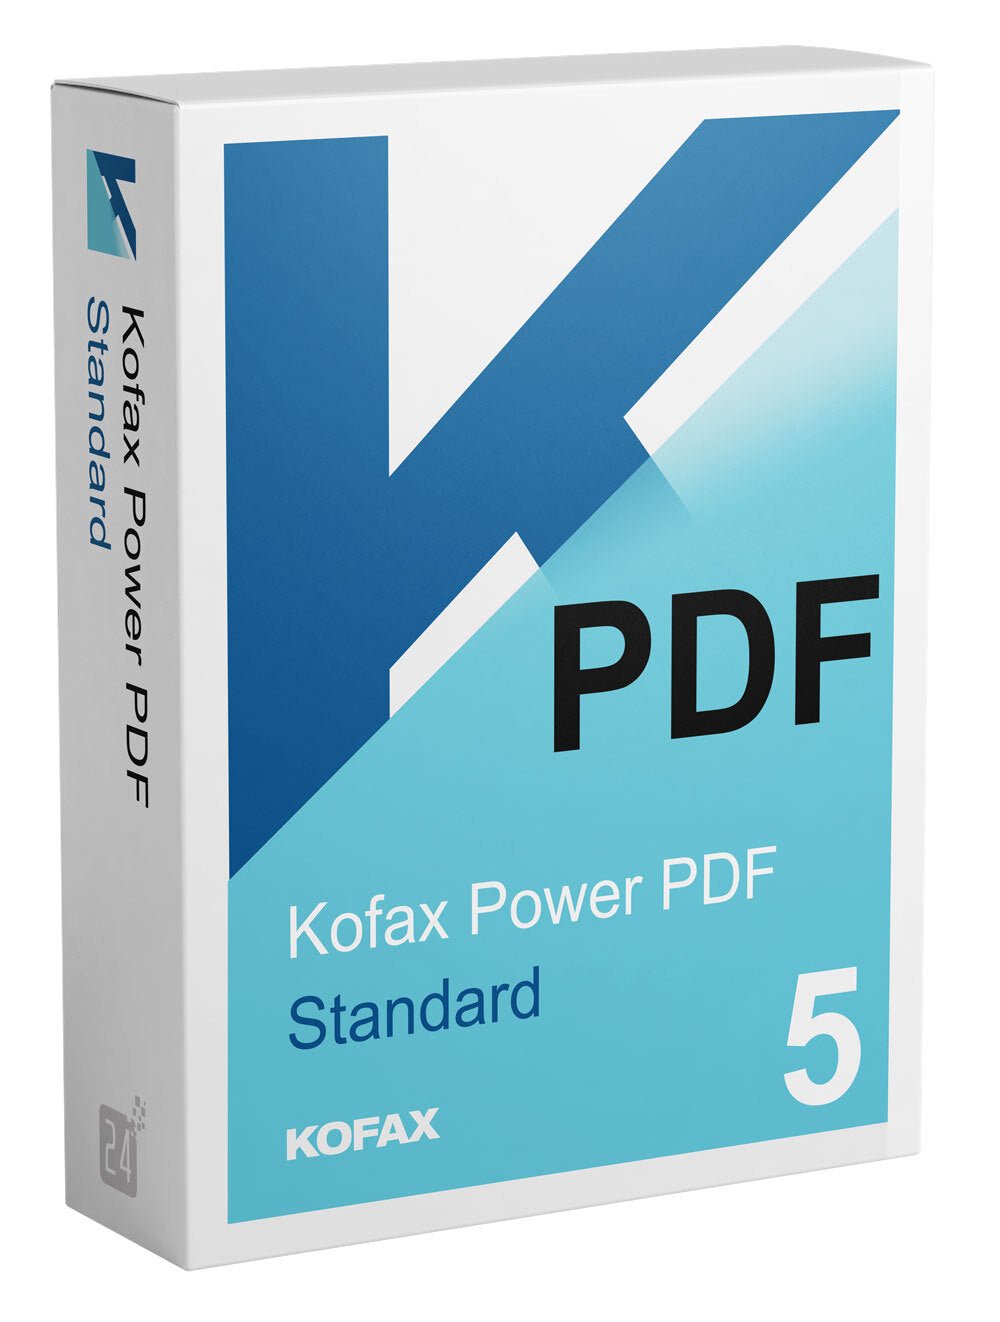 Kofax (Nuance) Power PDF 5 Standard for Windows (PPD-PER-0346-001U) - Win-Pro Consultancy Pte Ltd